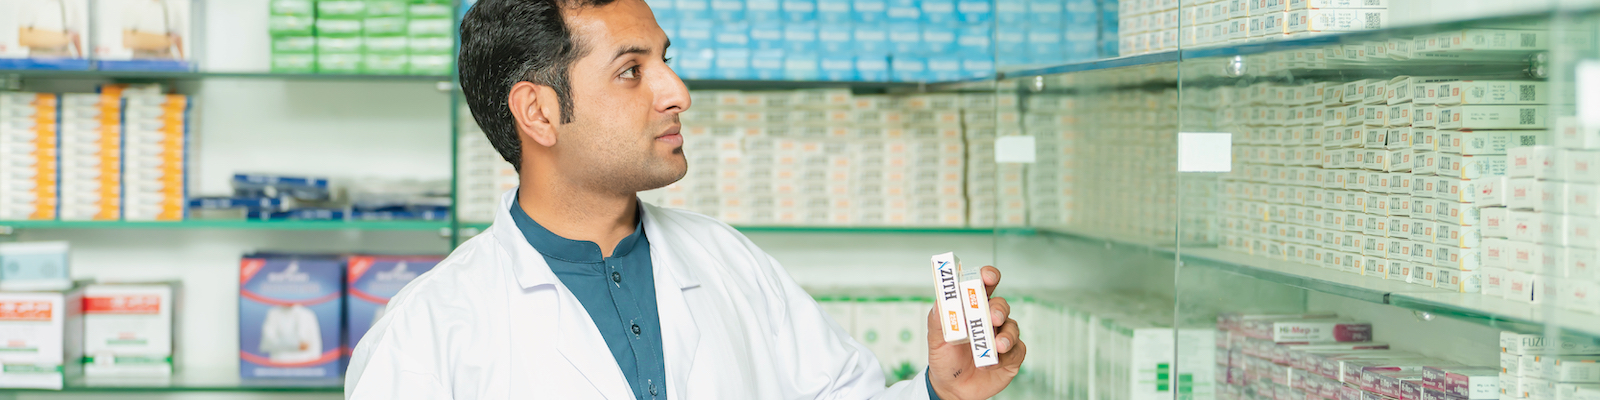 man in lab coat stocking medicine in a pharmacy